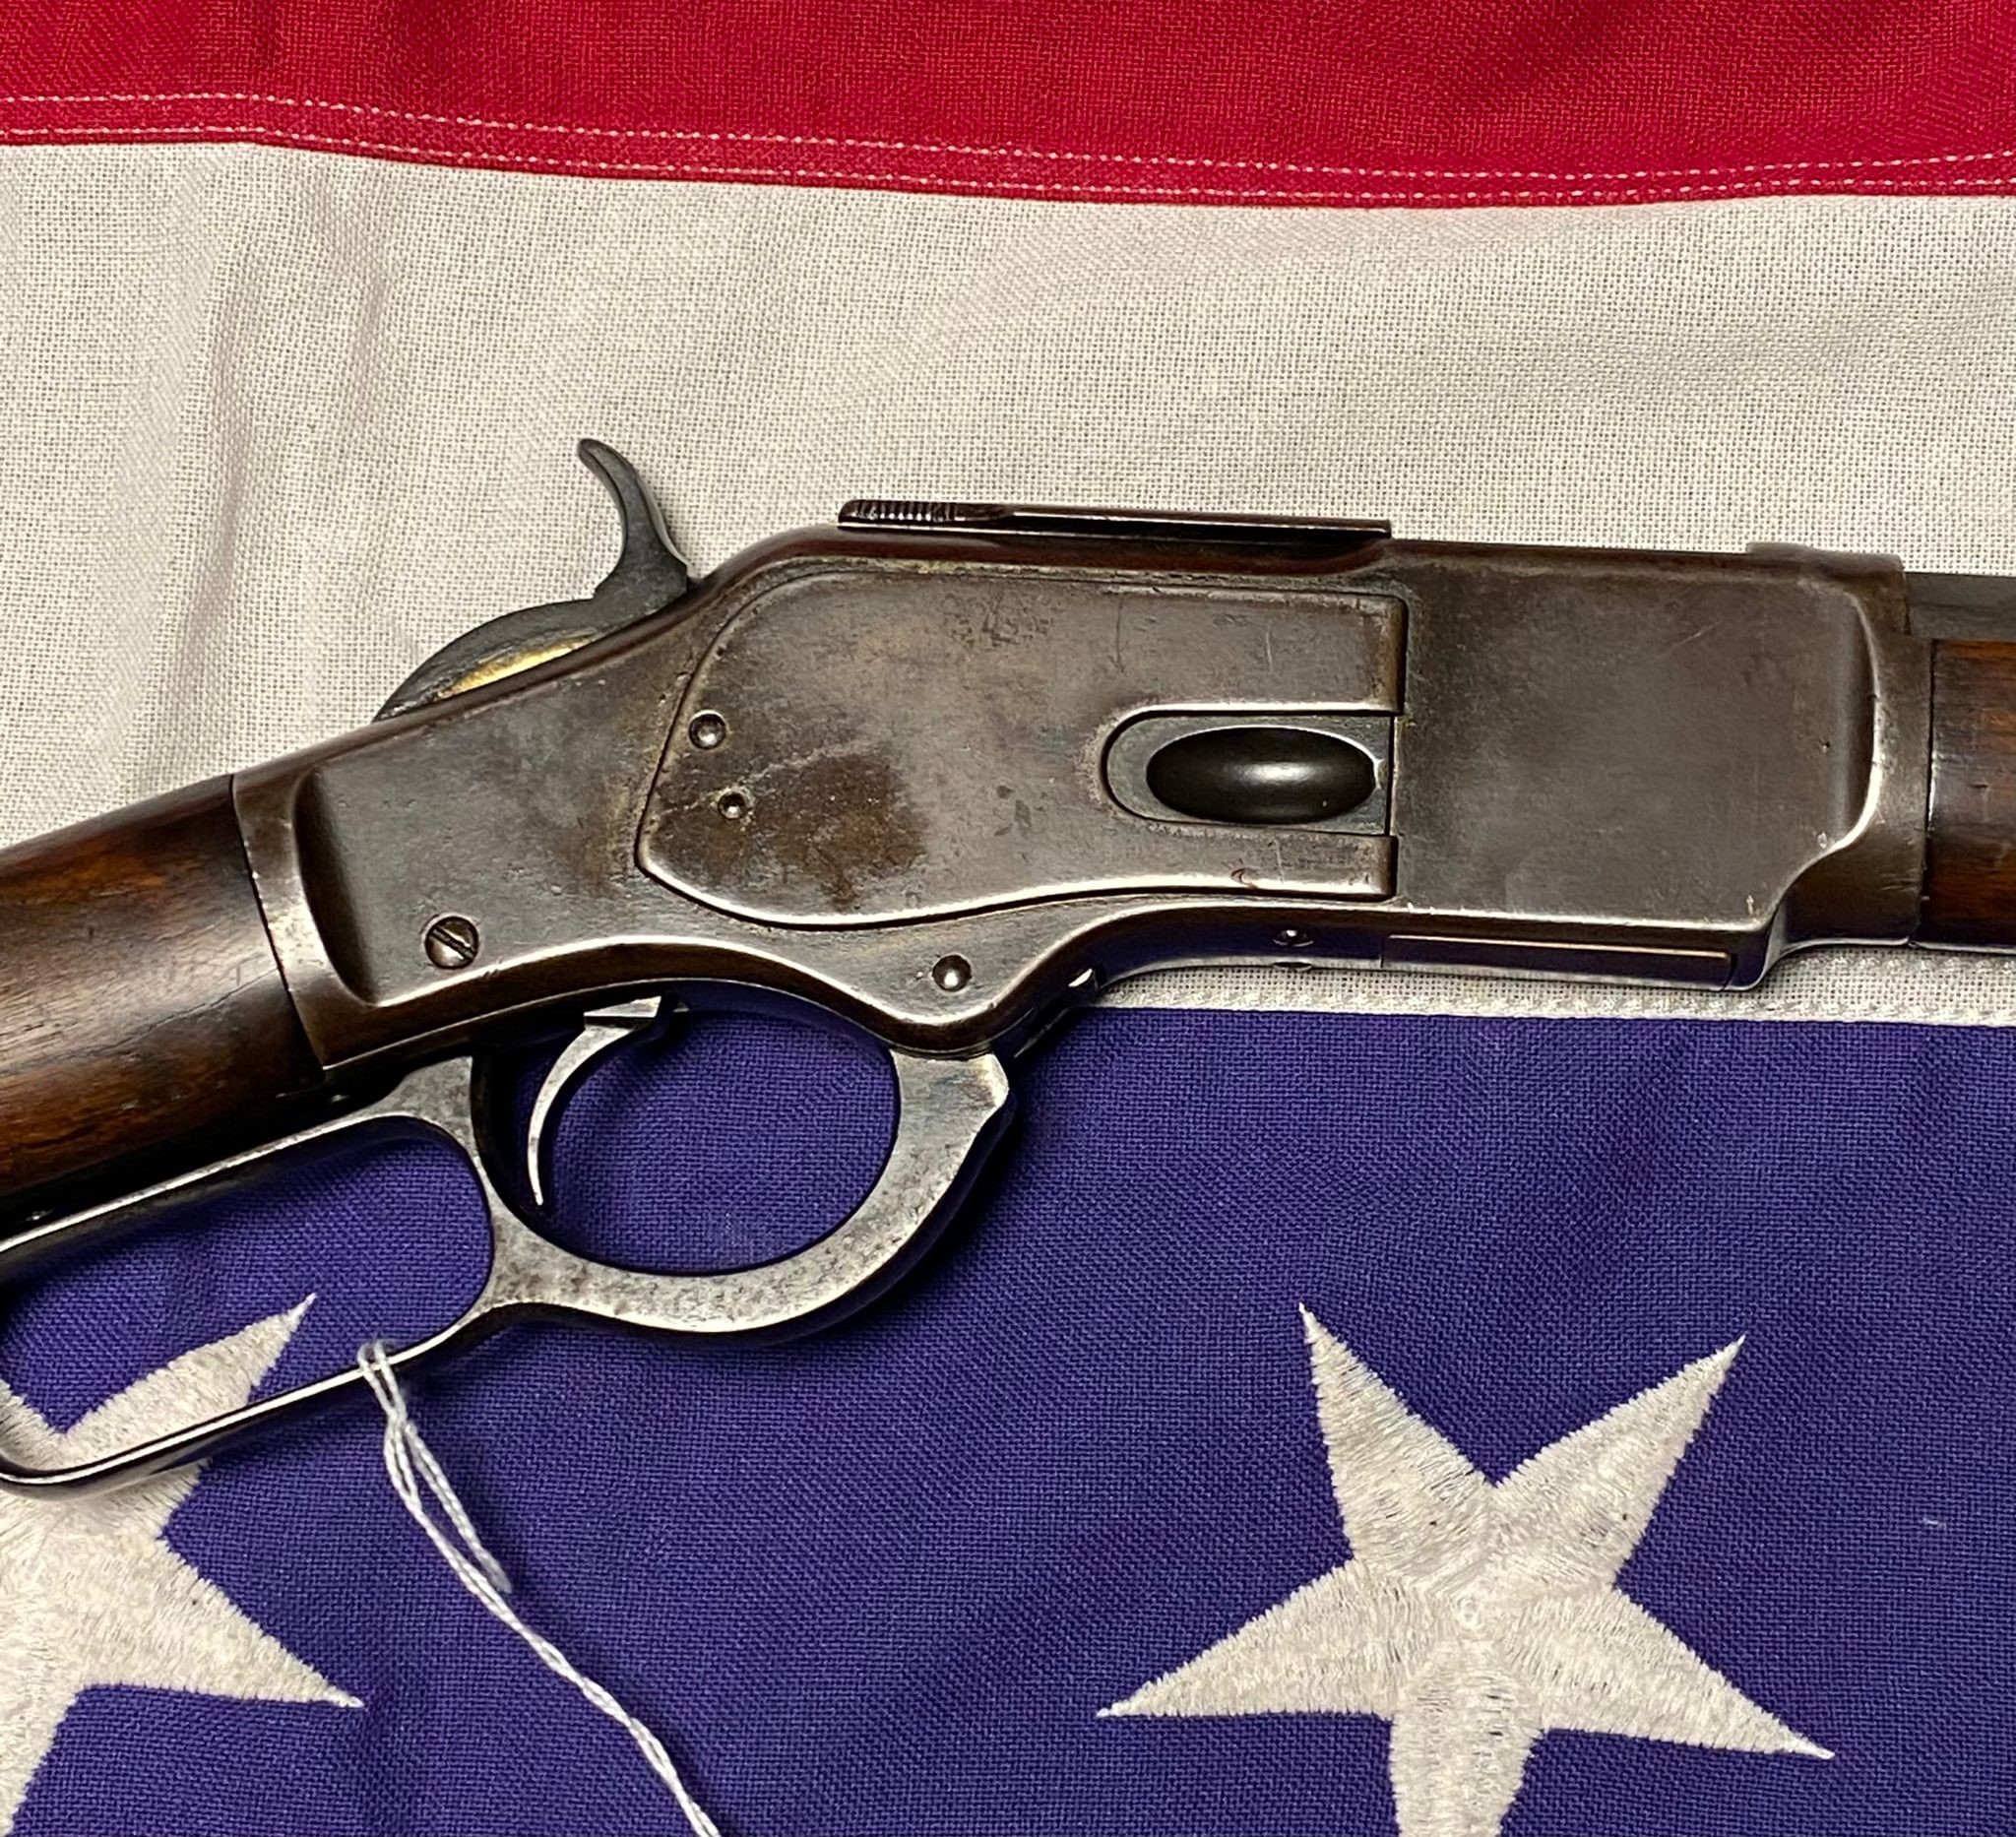 Winchester model 1873 in cal. 38/40